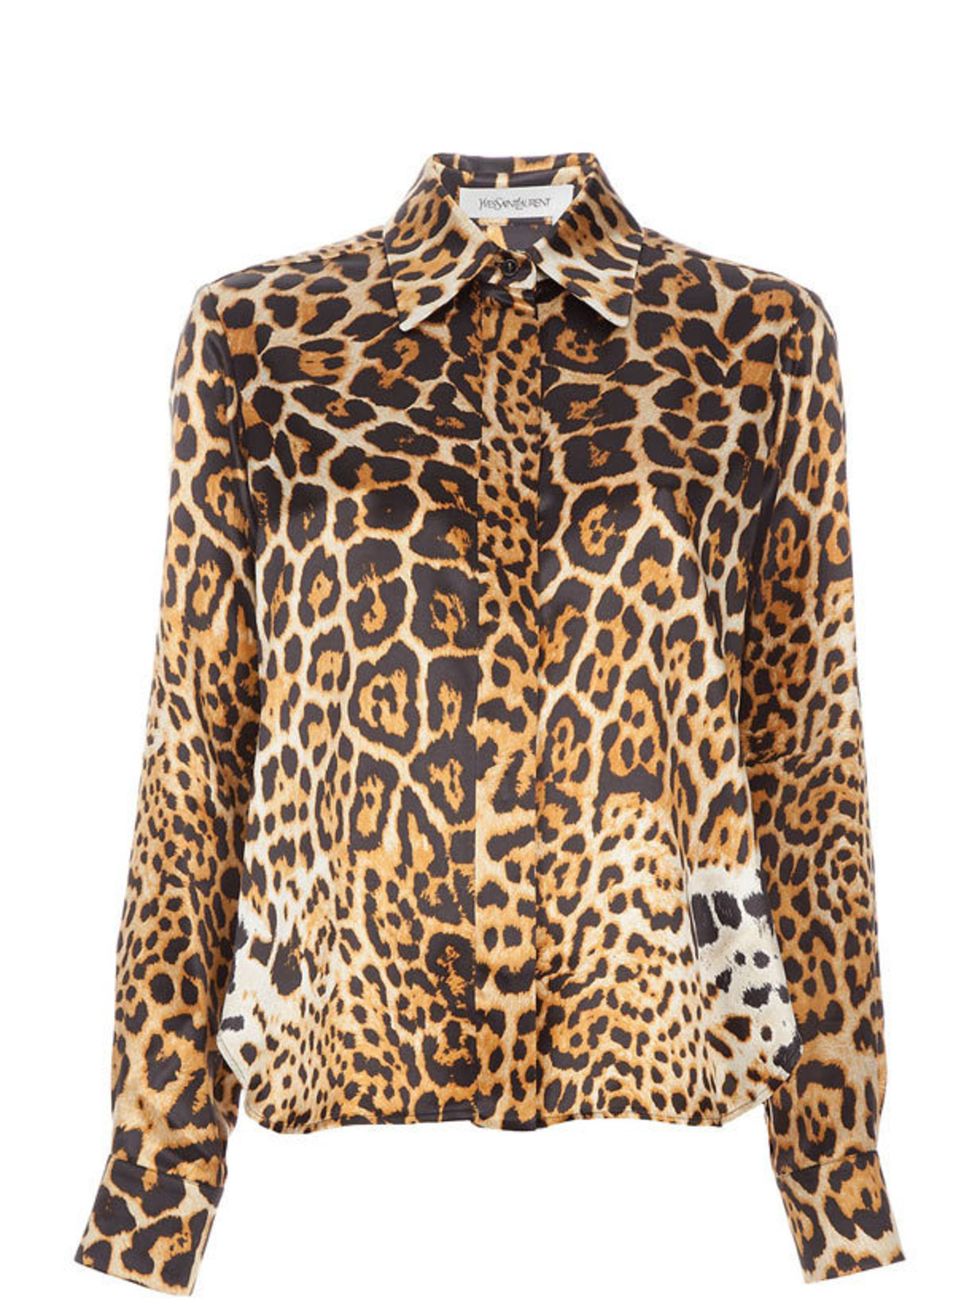 <p>Yves Saint Laurent 'Animalier' shirt, £789, at <a href="http://www.farfetch.com/shopping/women/yves-saint-laurent/clothing/yves-saint-laurent-animalier-shirt-item-10097970.aspx">Farfetch</a></p>